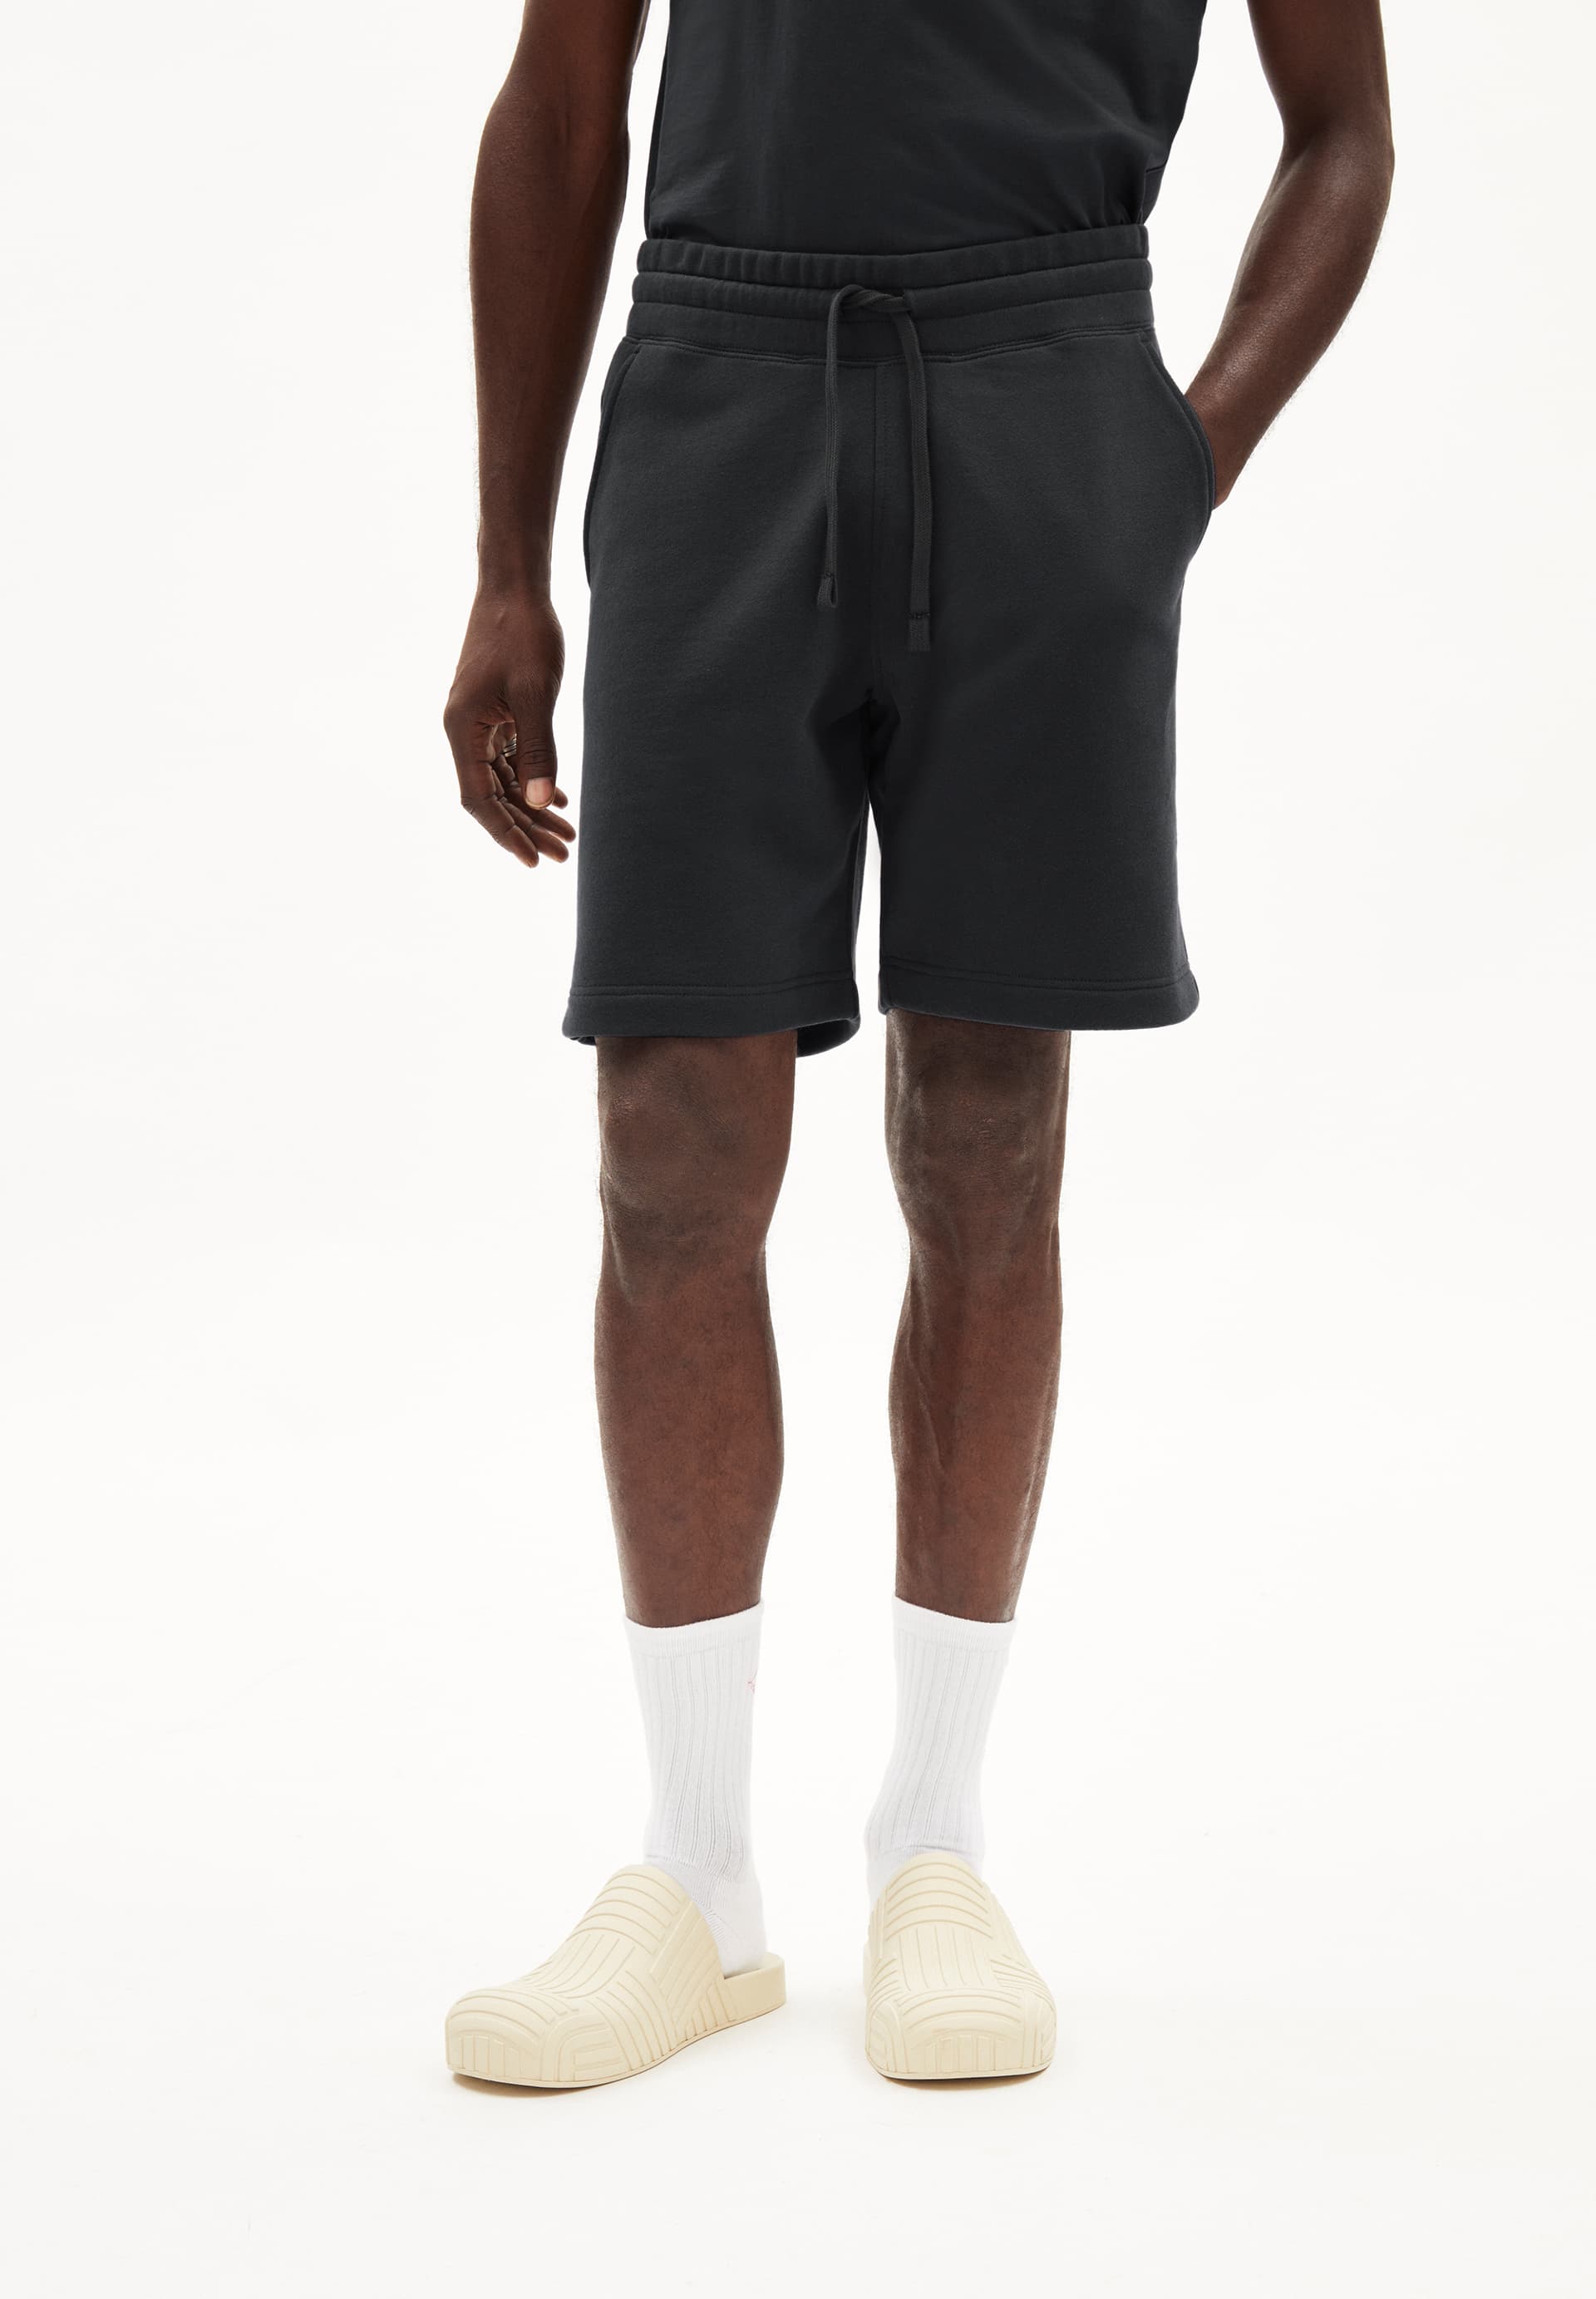 MAARCO COMFORT Sweat Shorts Regular Fit made of Organic Cotton Mix